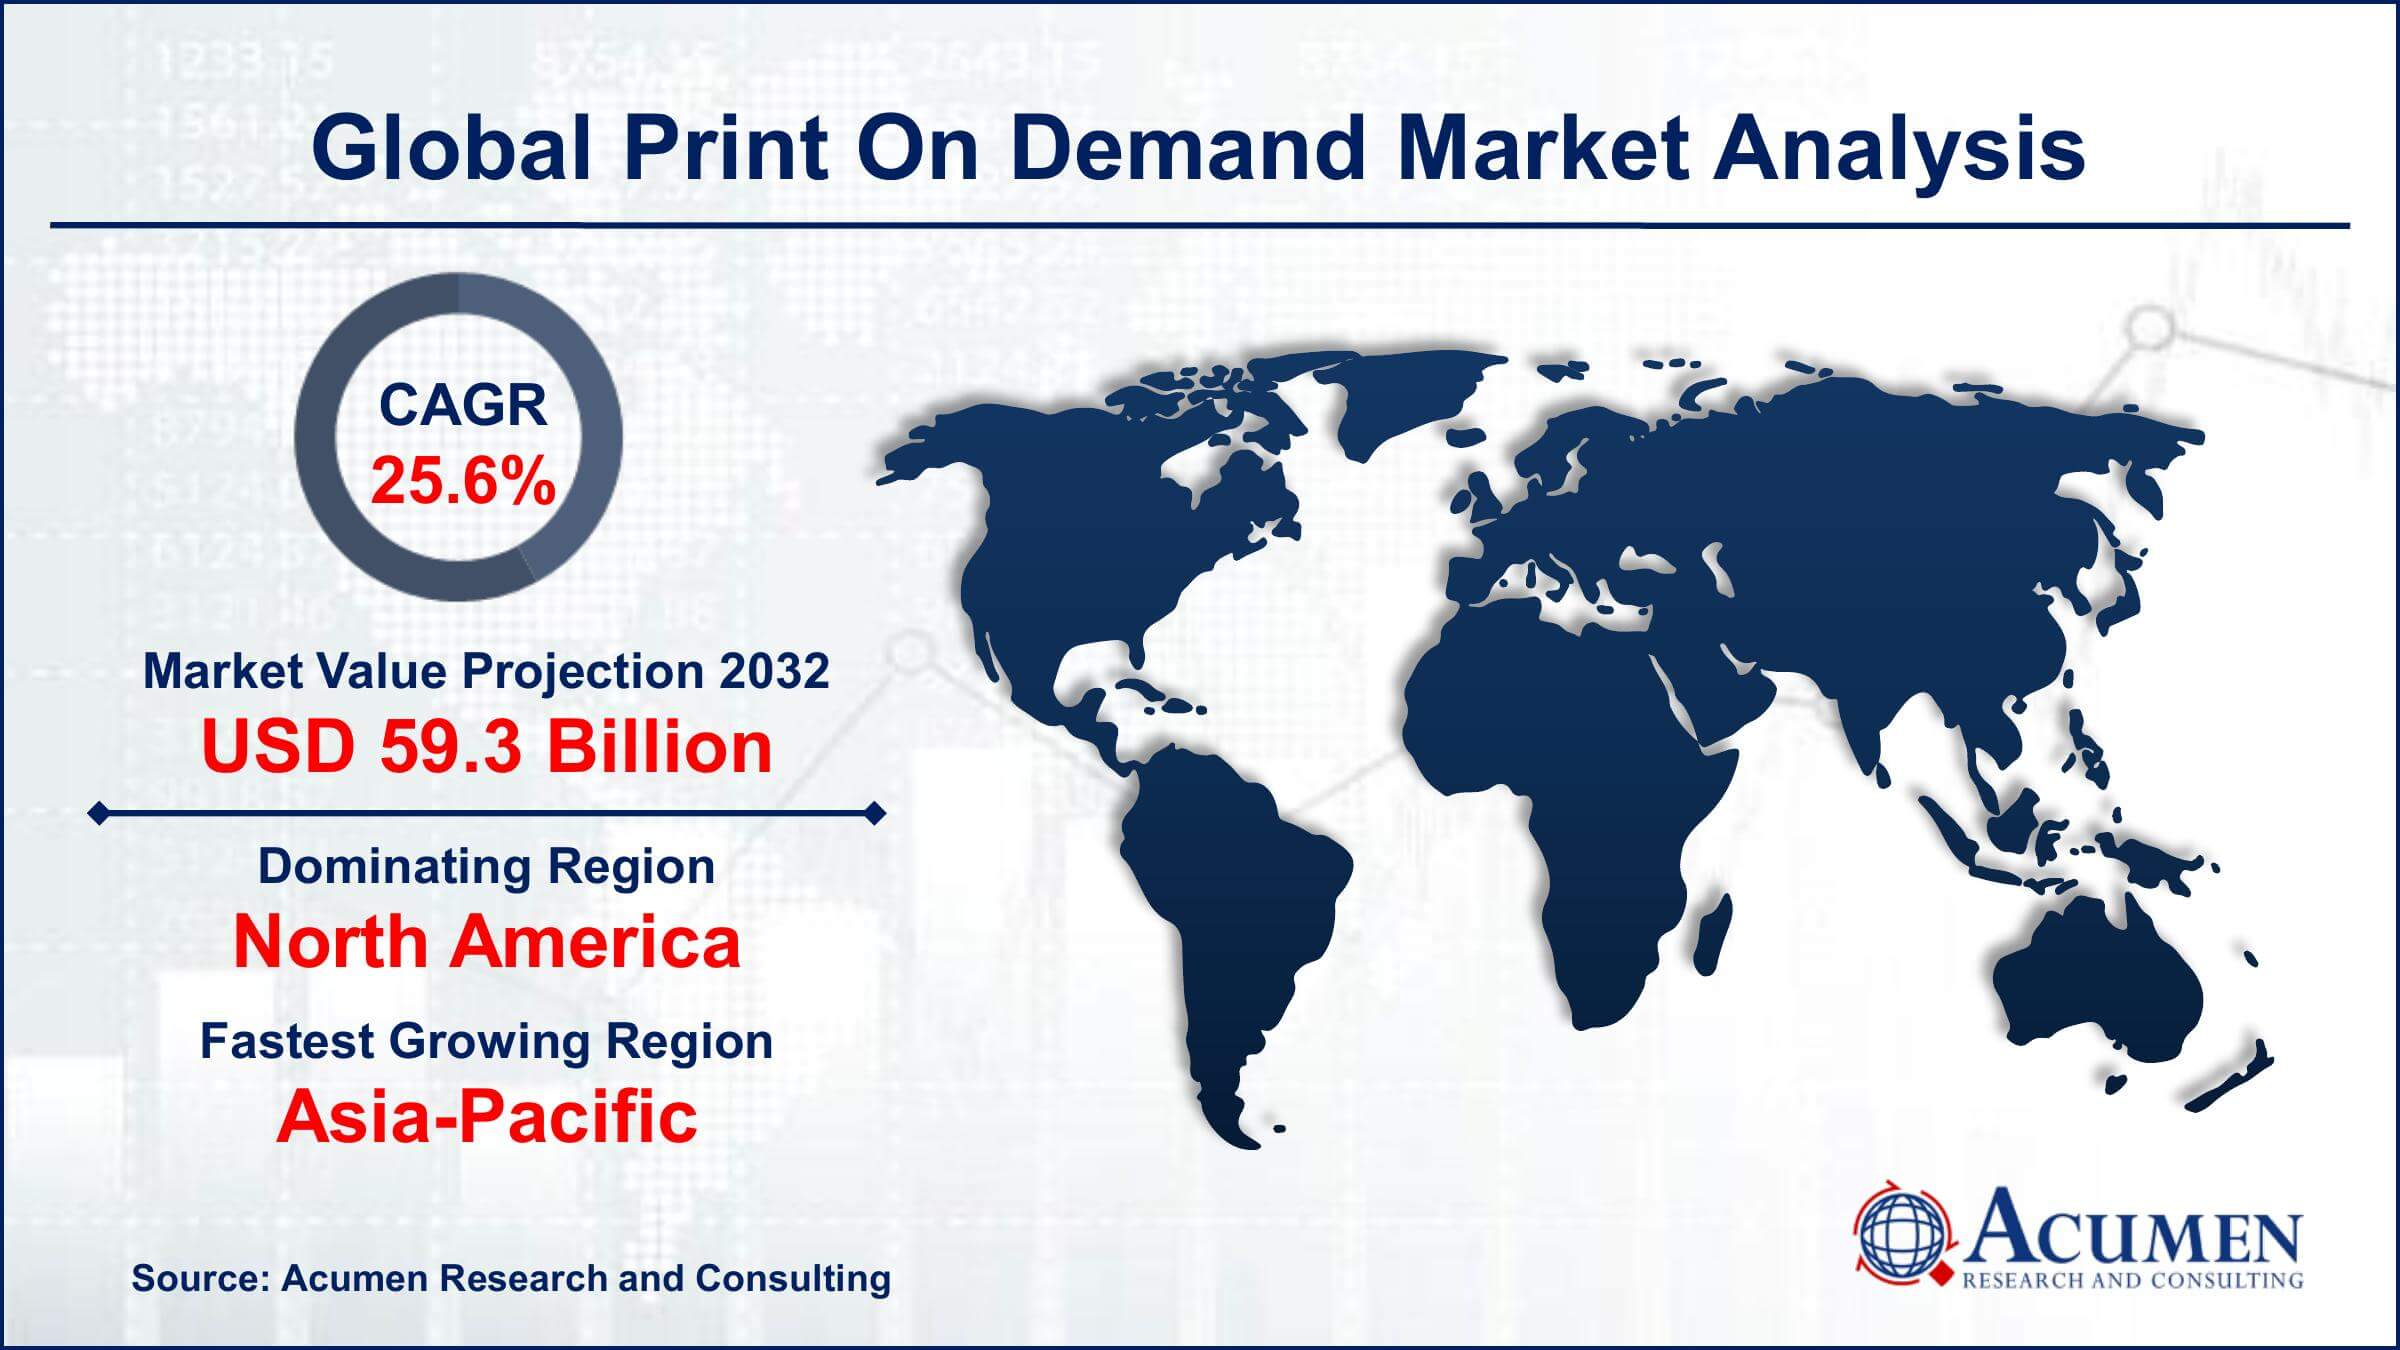 Print on Demand Market Trends